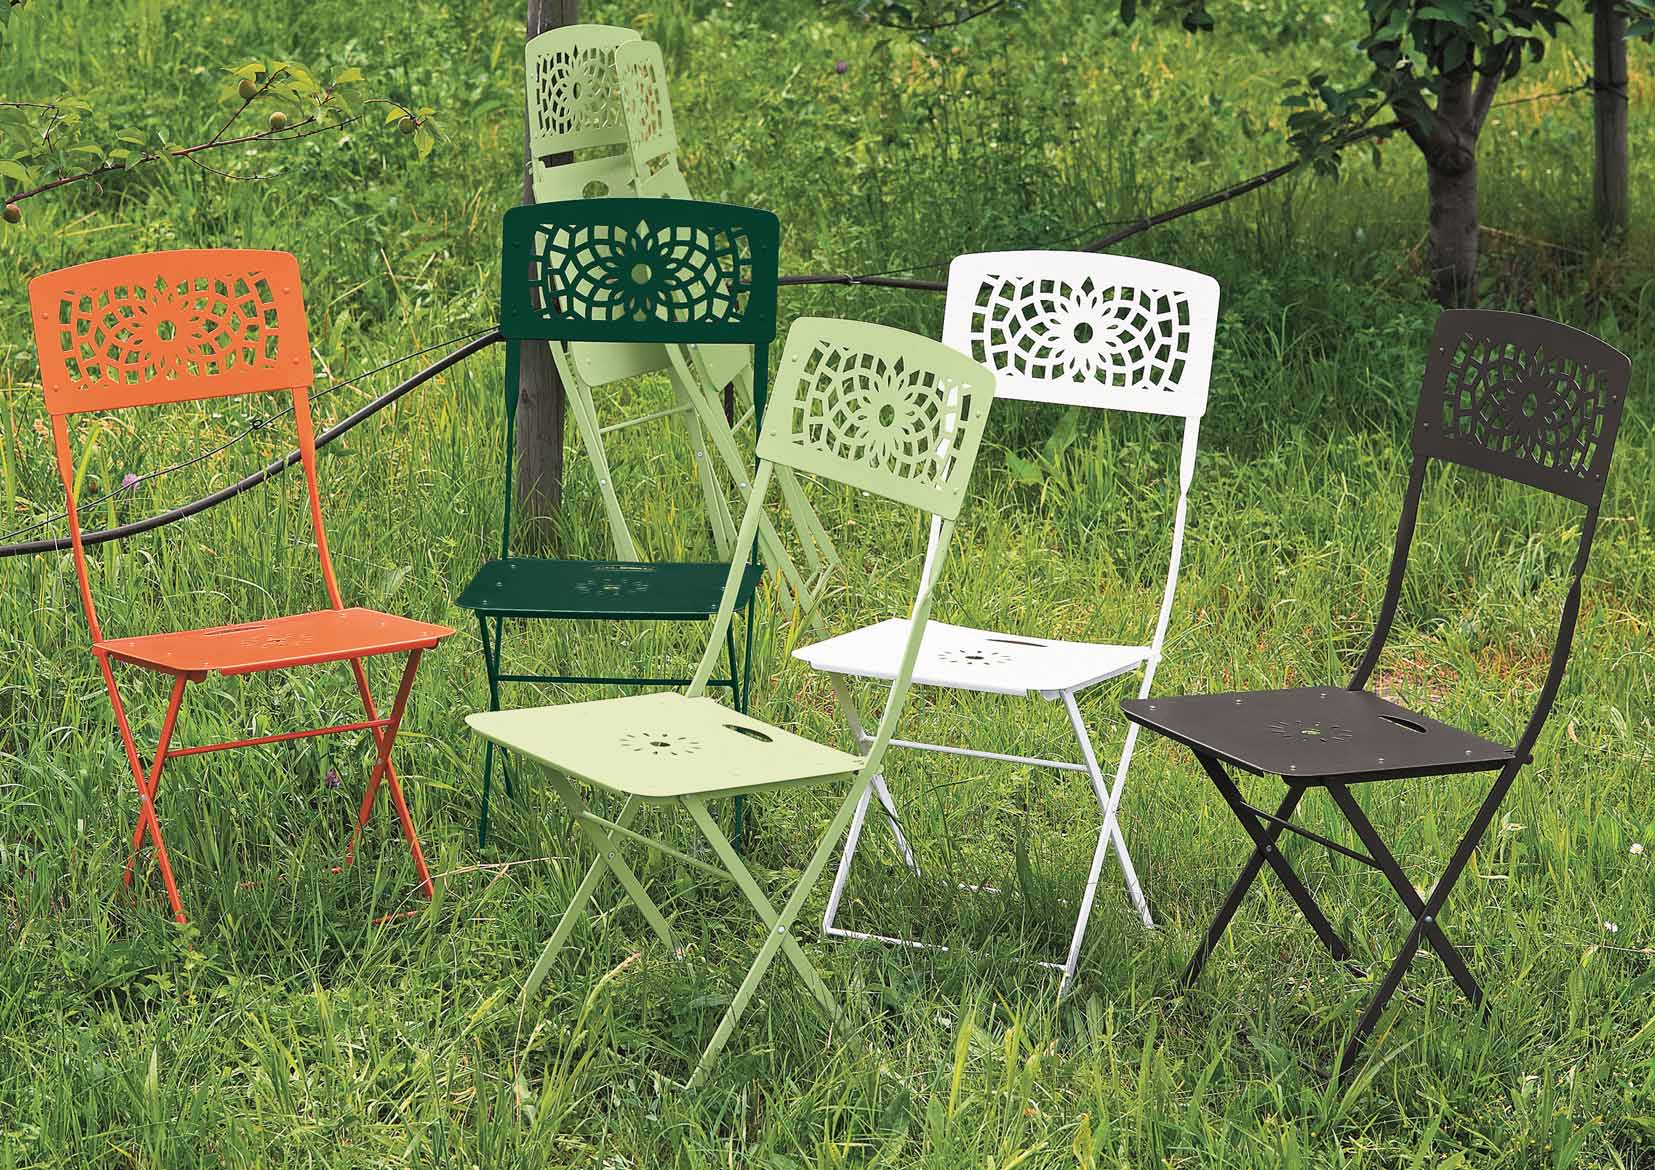 8 74 9 art. 2530 sedia chiudibile / folding chair arancio / orange art.